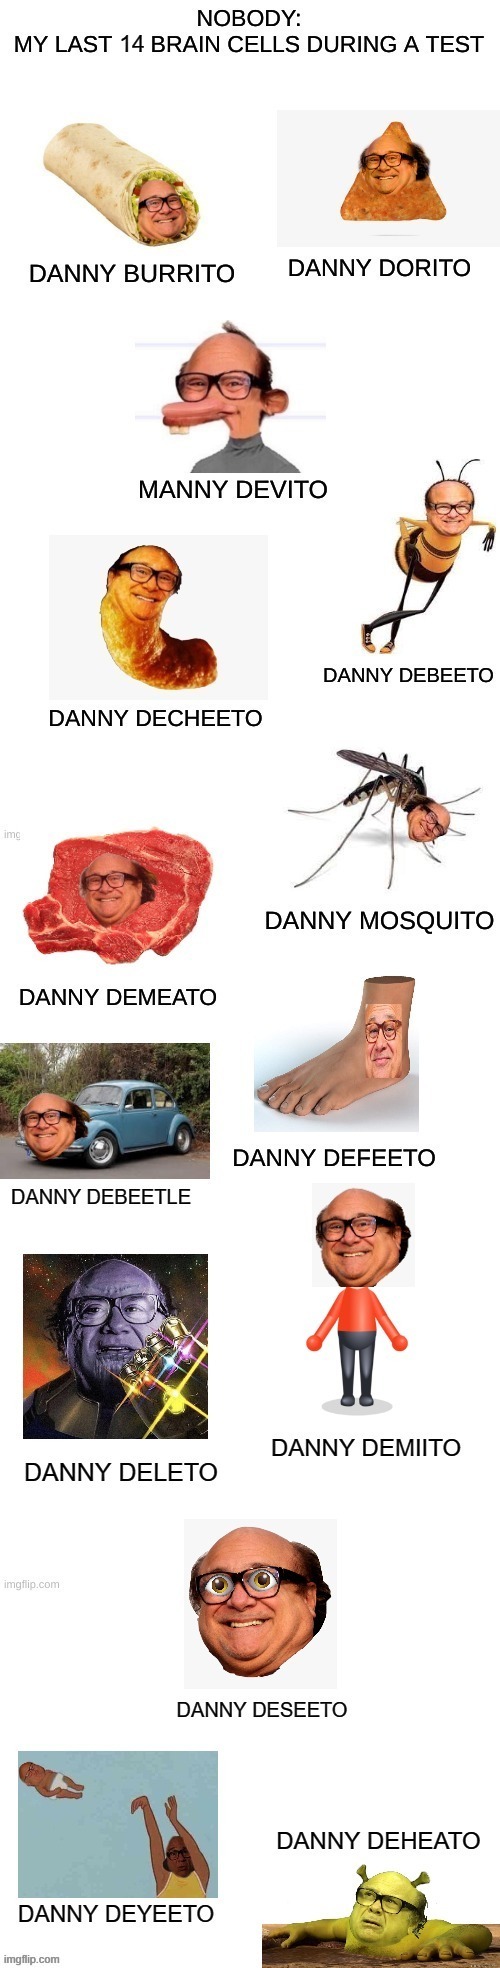 Danny devito | image tagged in meme,this took so long,danny devito | made w/ Imgflip meme maker